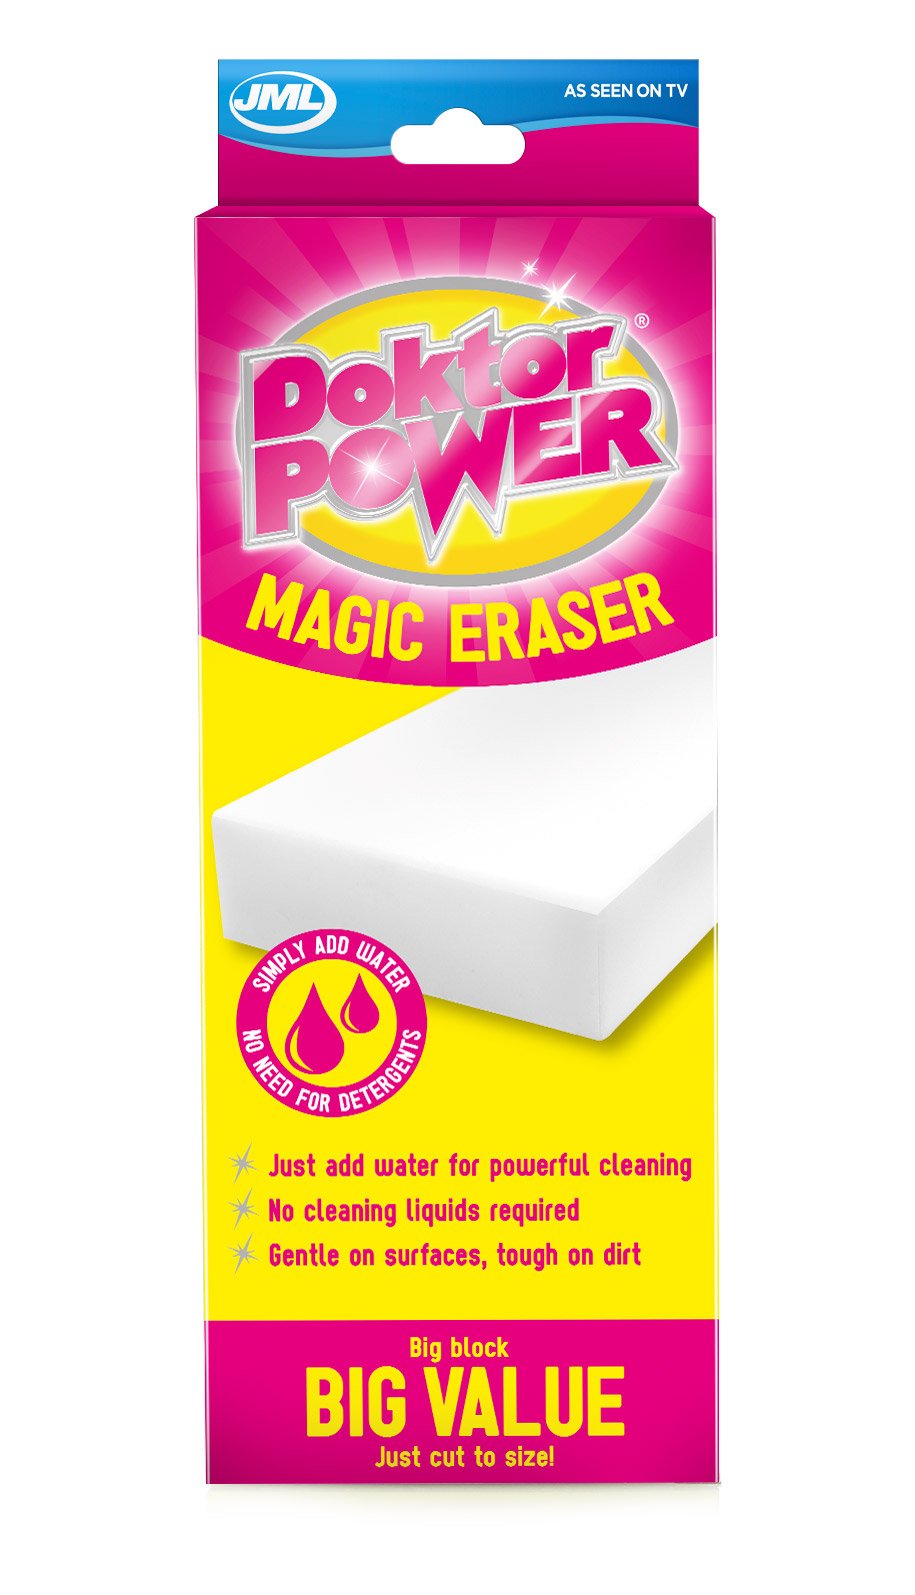 JML Doktor Power Magic Eraser CDU v1